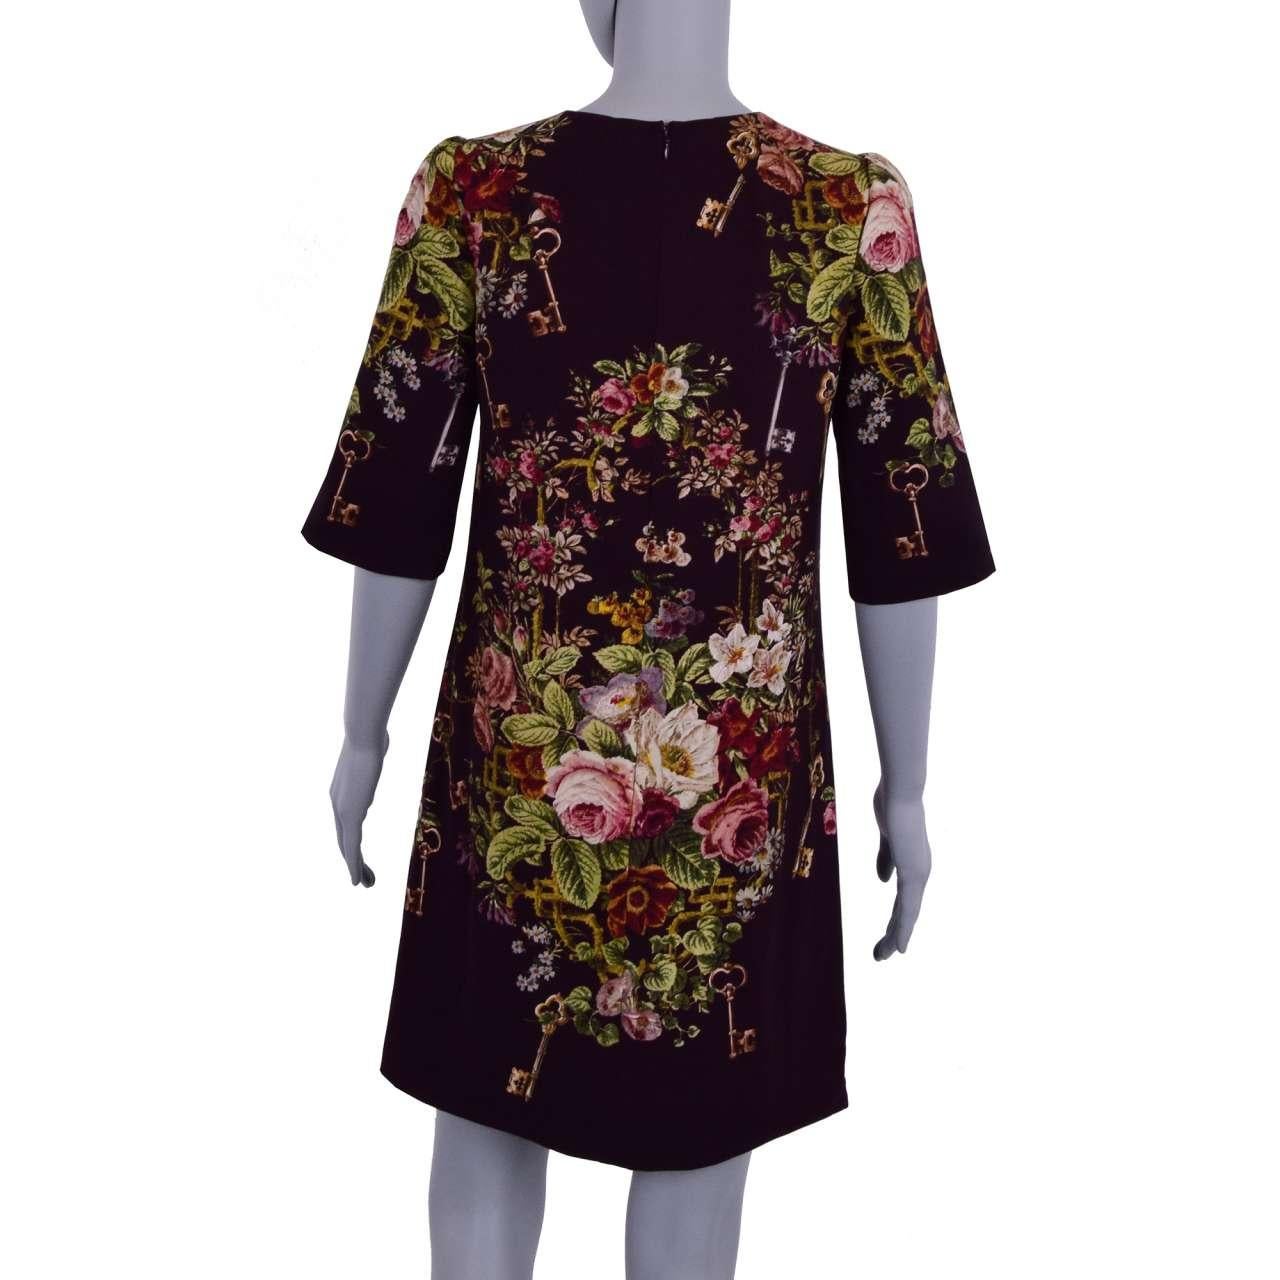 Dolce & Gabbana - Keys Roses Printed Dress Bordeaux IT 38 For Sale 2